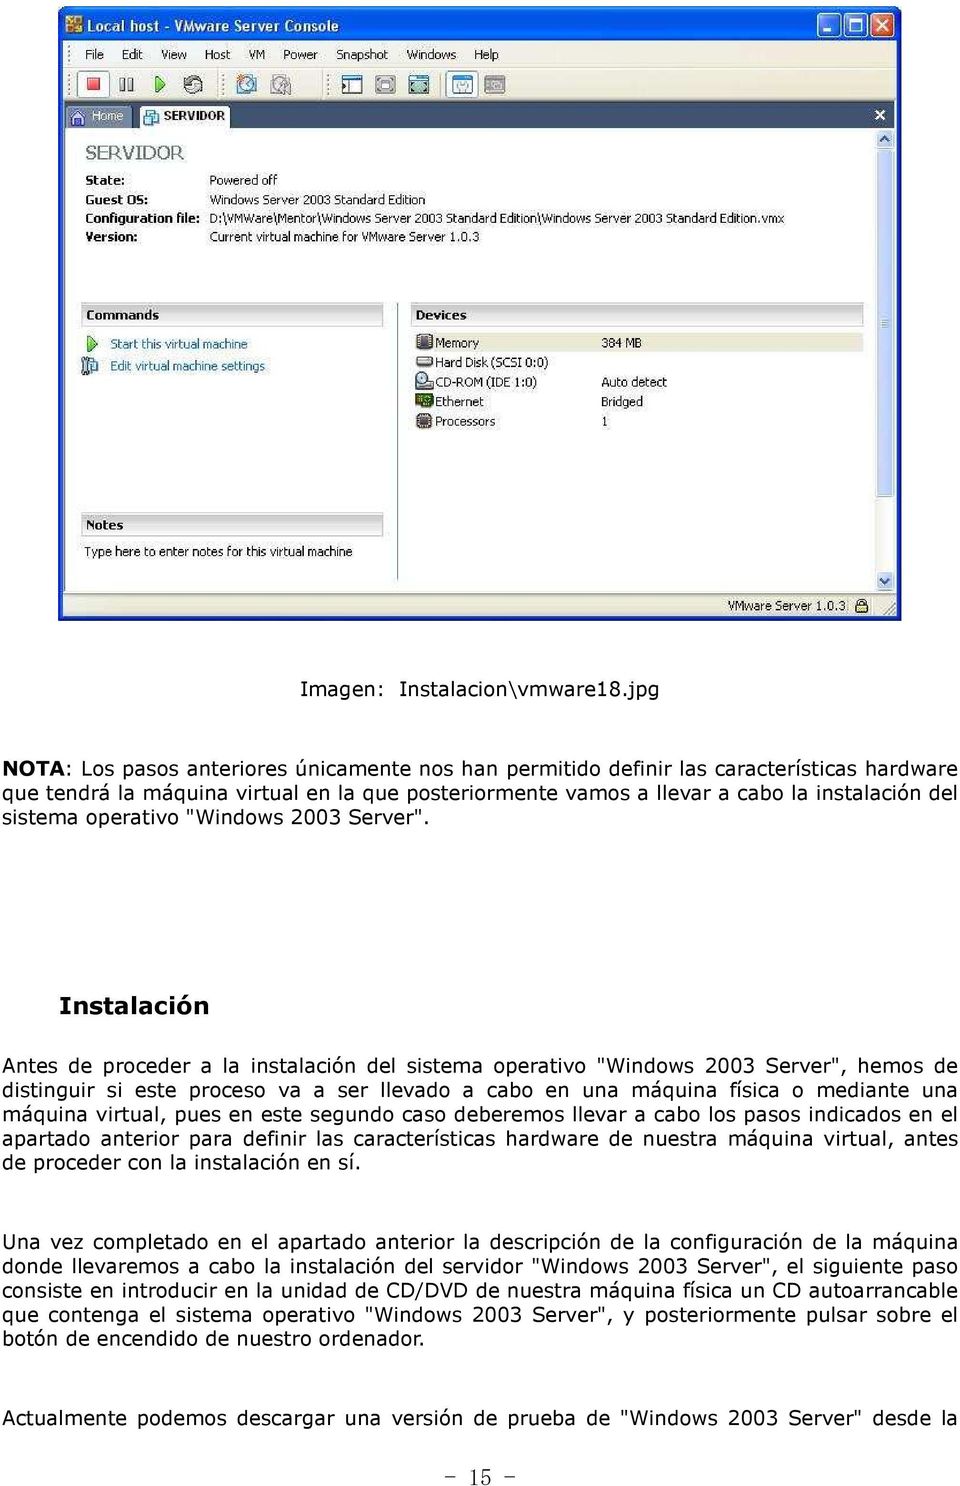 sistema operativo "Windows 2003 Server".